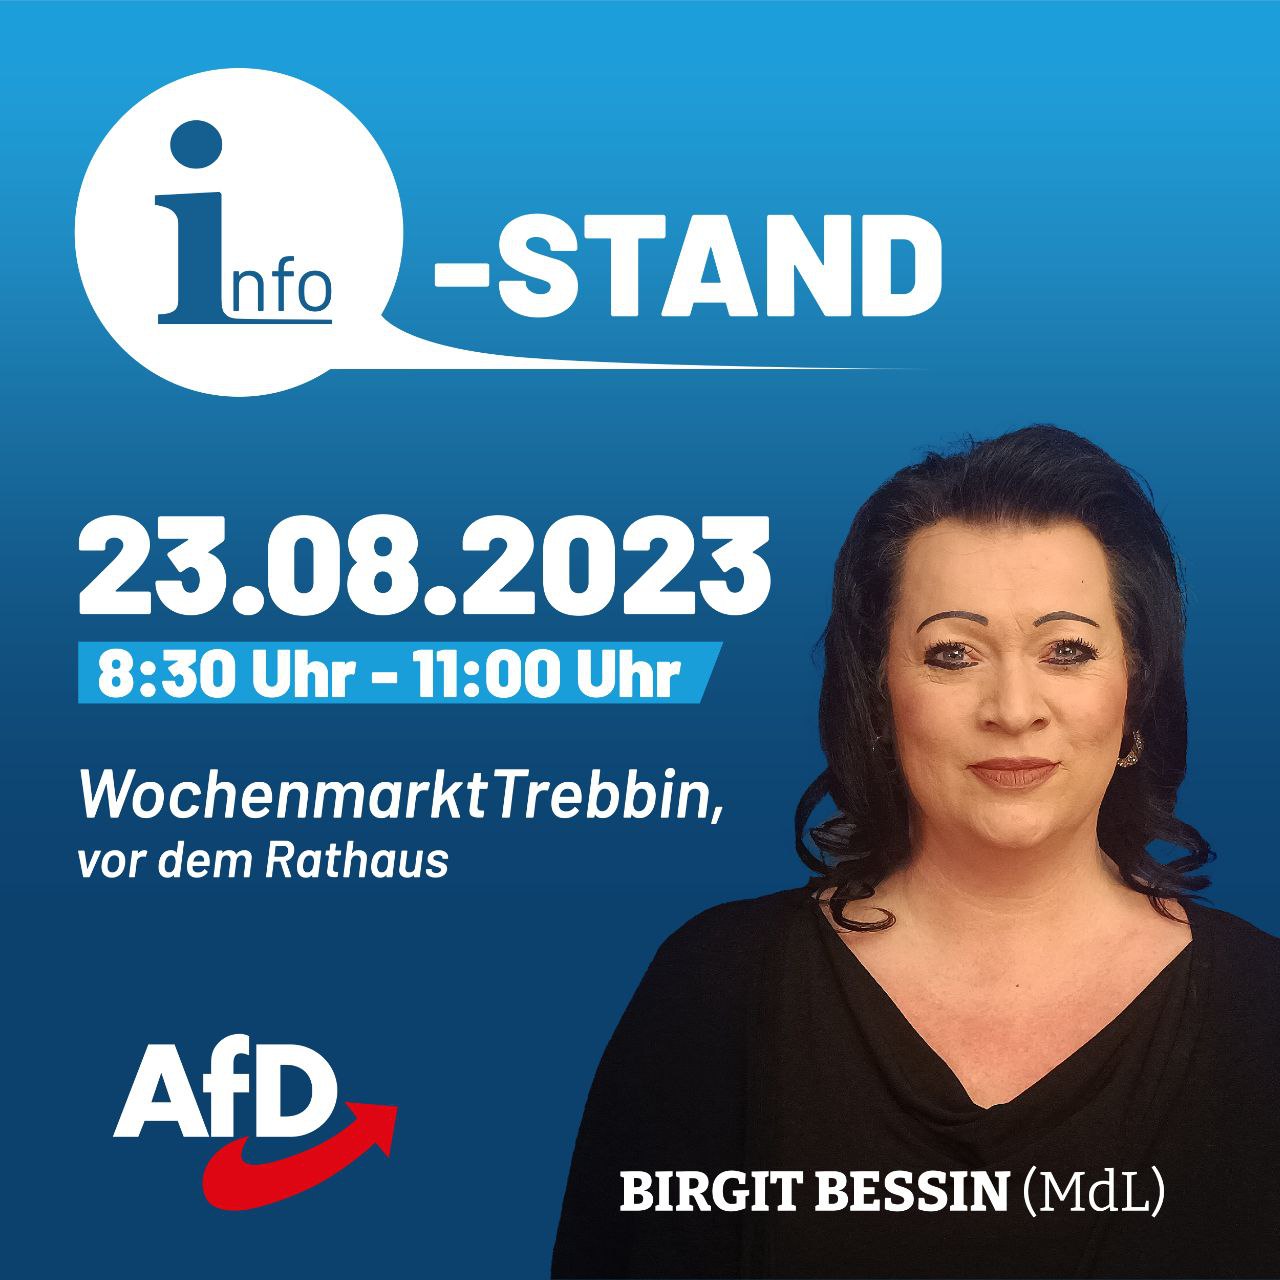 Infostand Birgit Bessin (MdL)